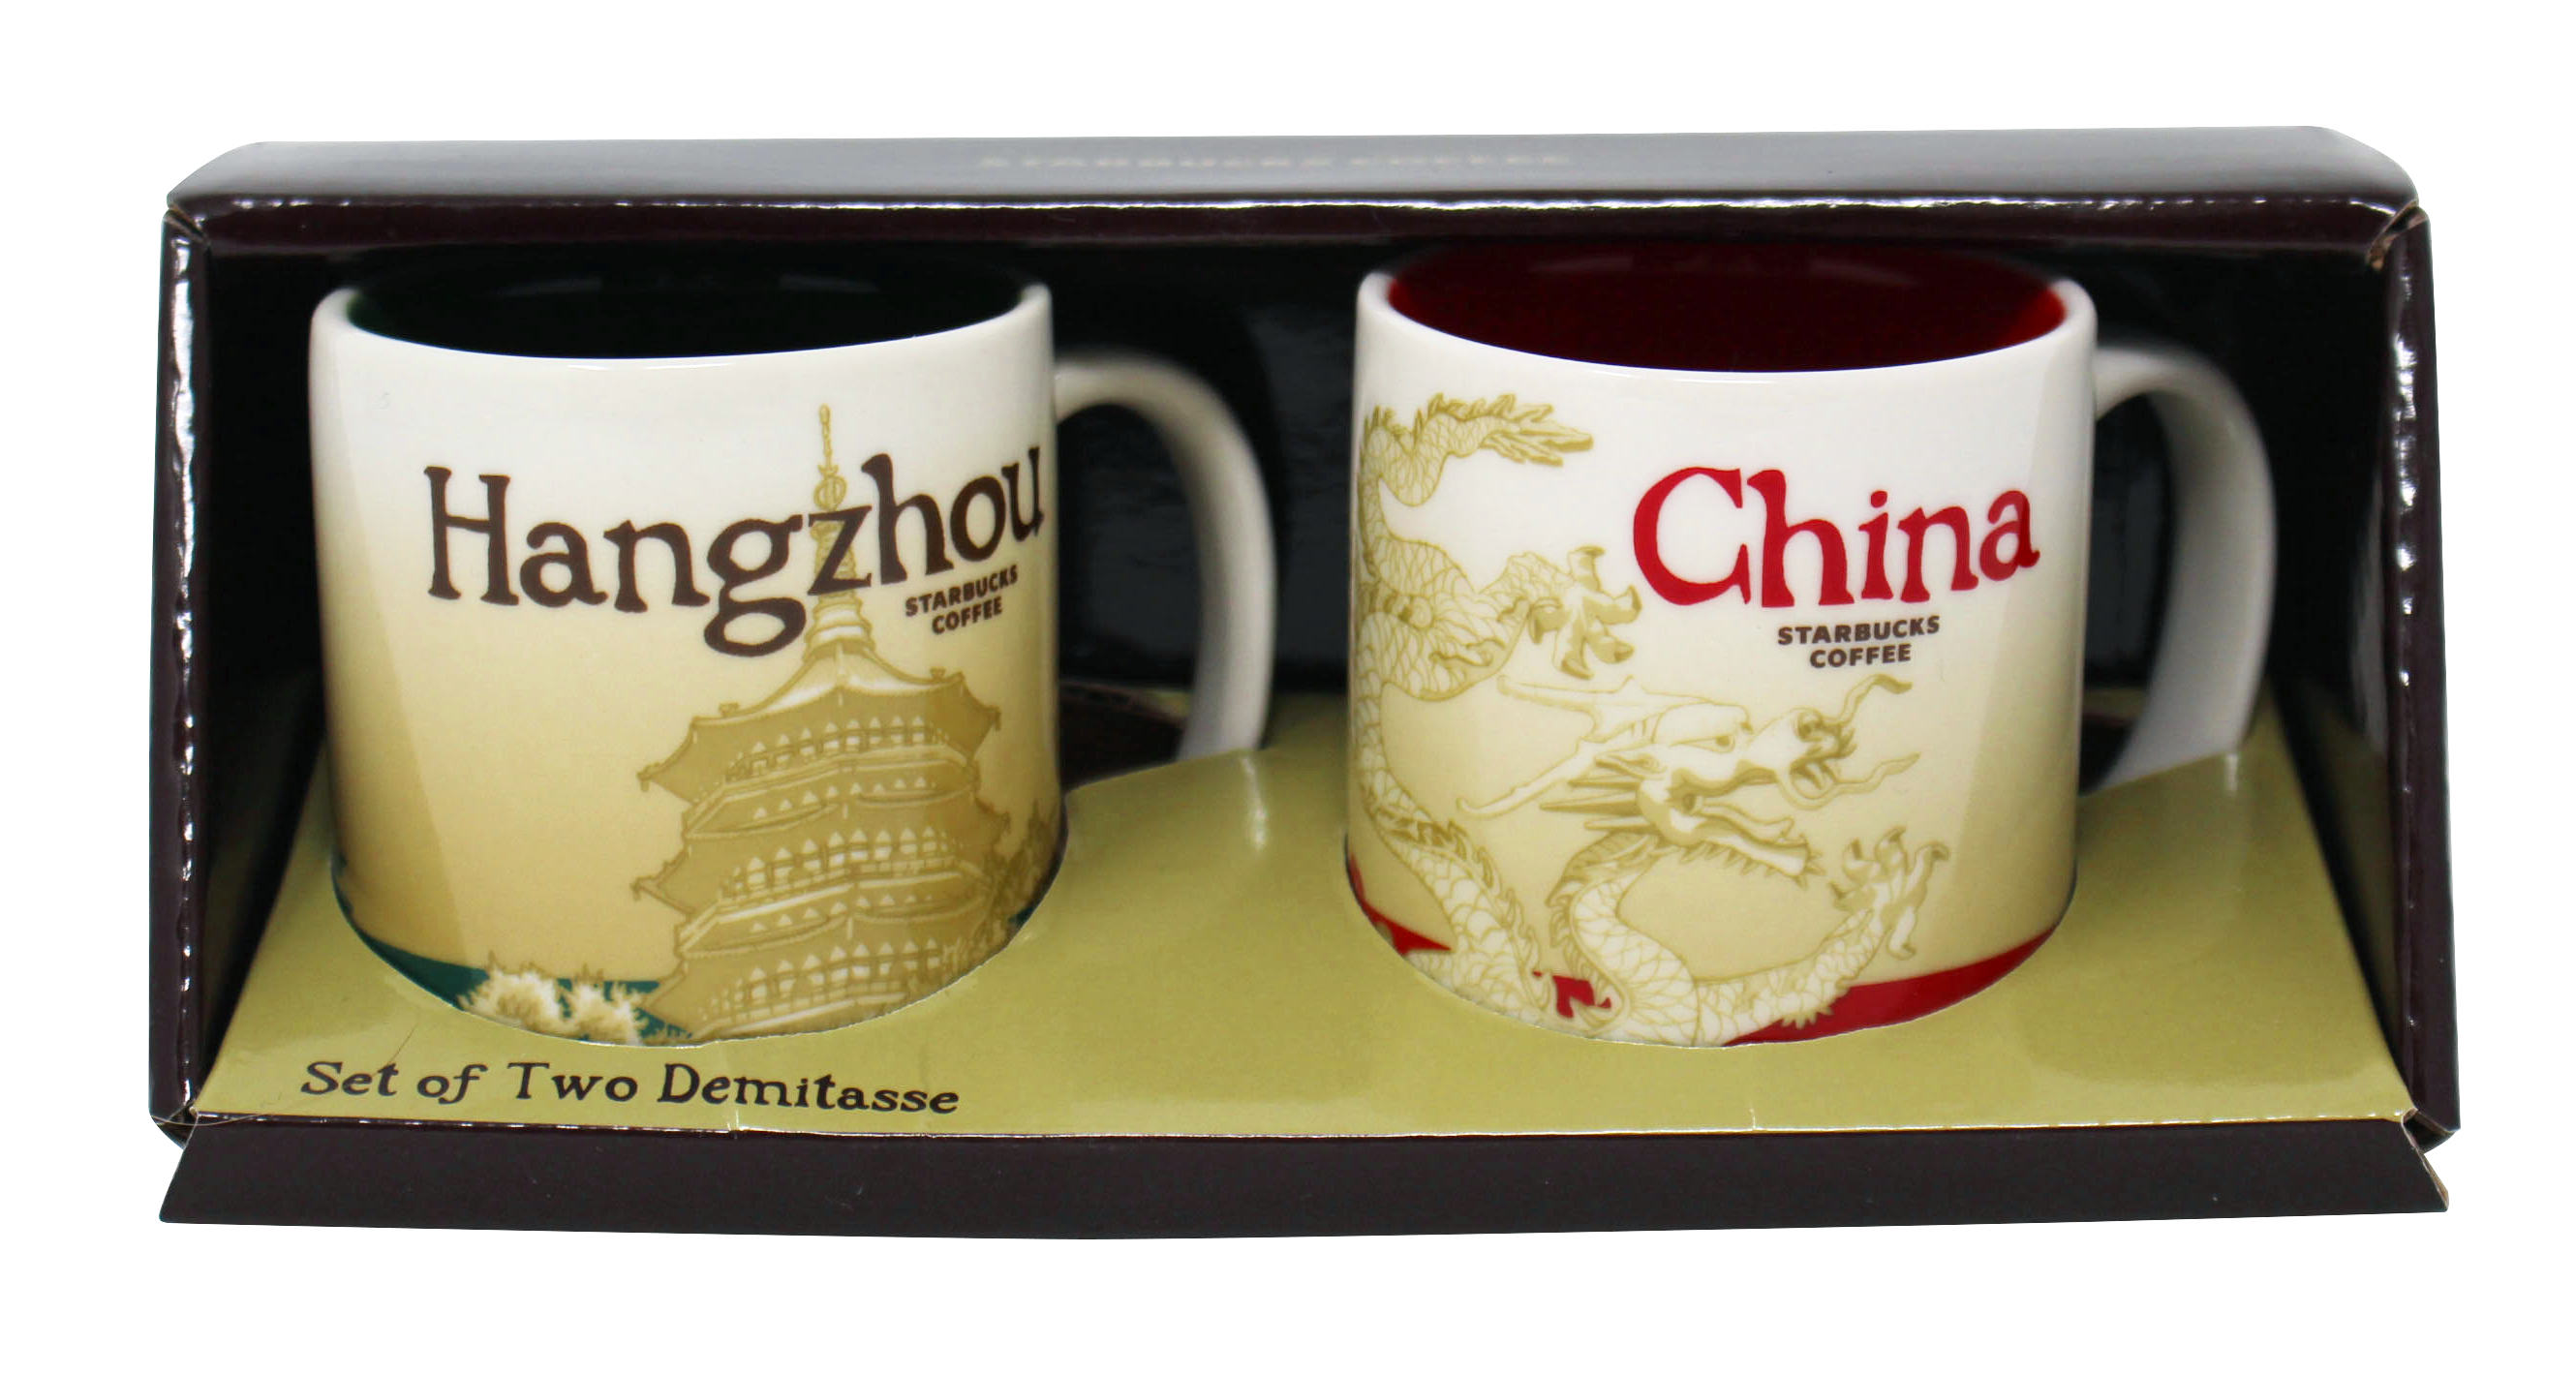 Starbucks Global Icon Mini Series Demitasse Mugs, Hangzhou and China, 3 Oz